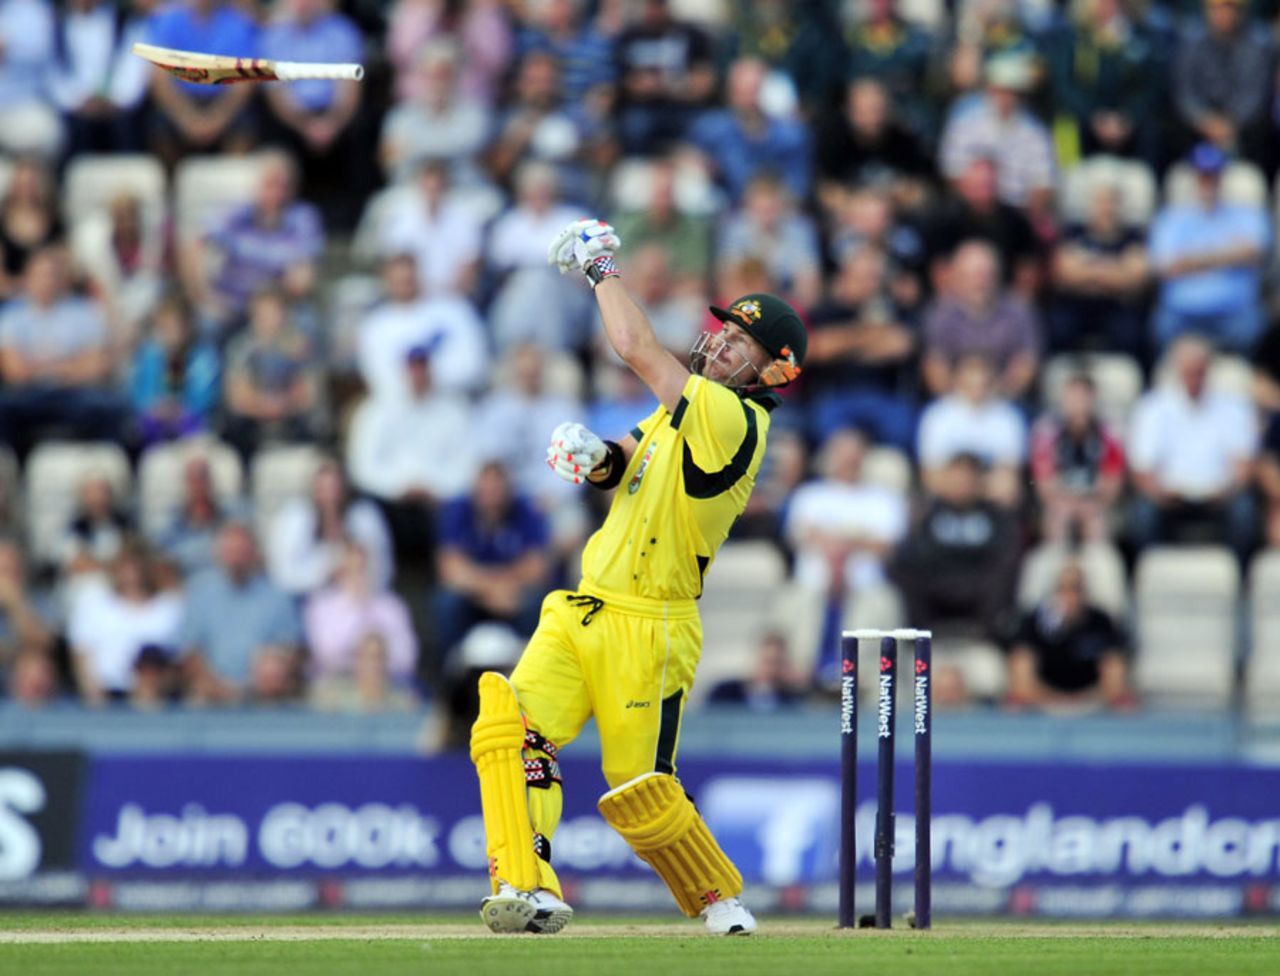 David Warner was dismissed throwing the bat, England v Australia, 1st T20, Ageas Bowl, August 29, 2013